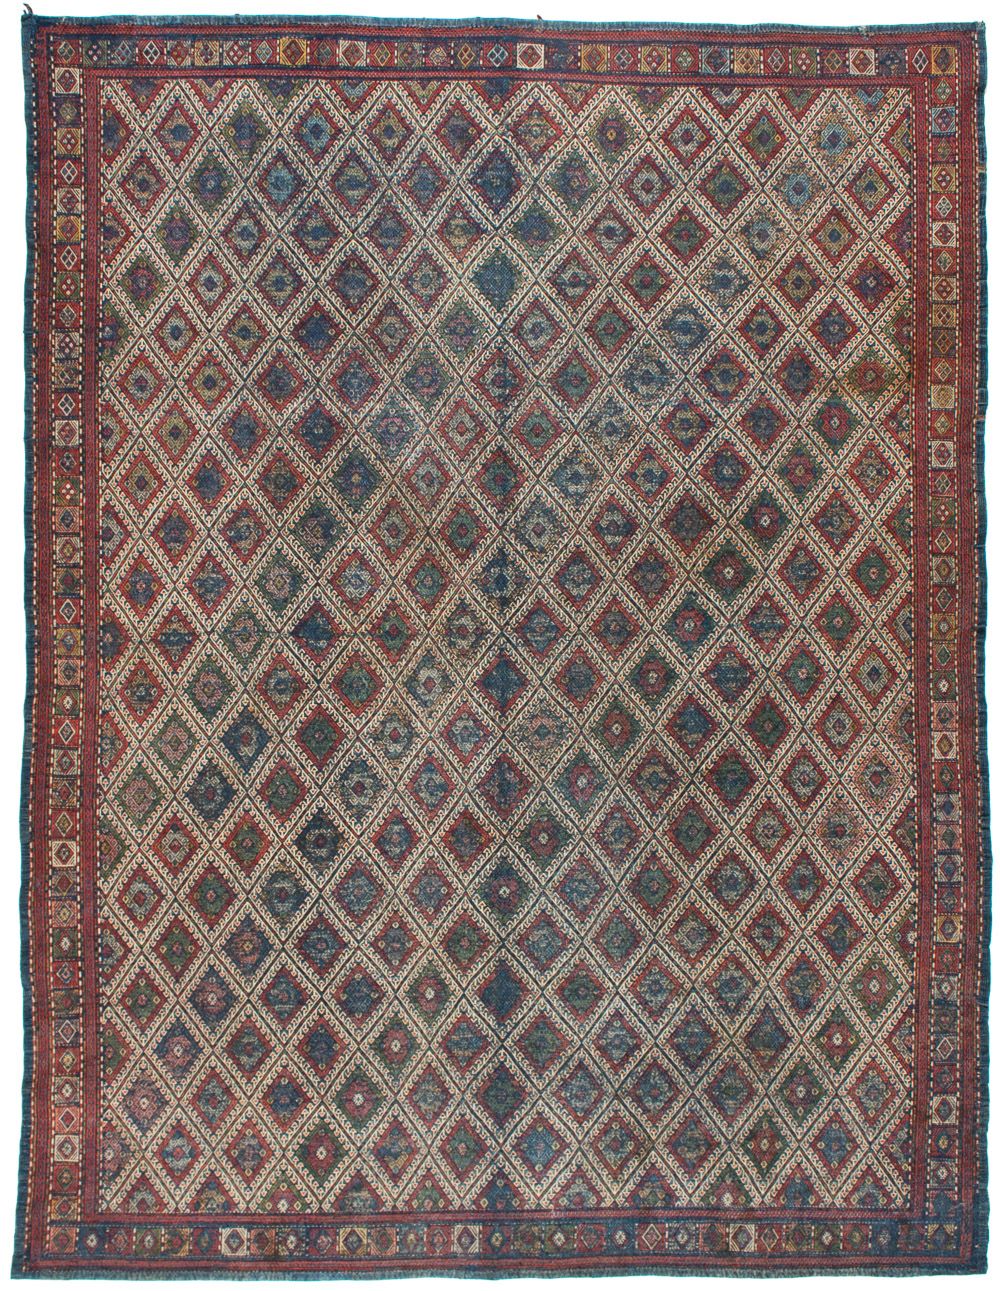 Shahsavan sumakh, silk, 170 x 220 cm, Ramezani